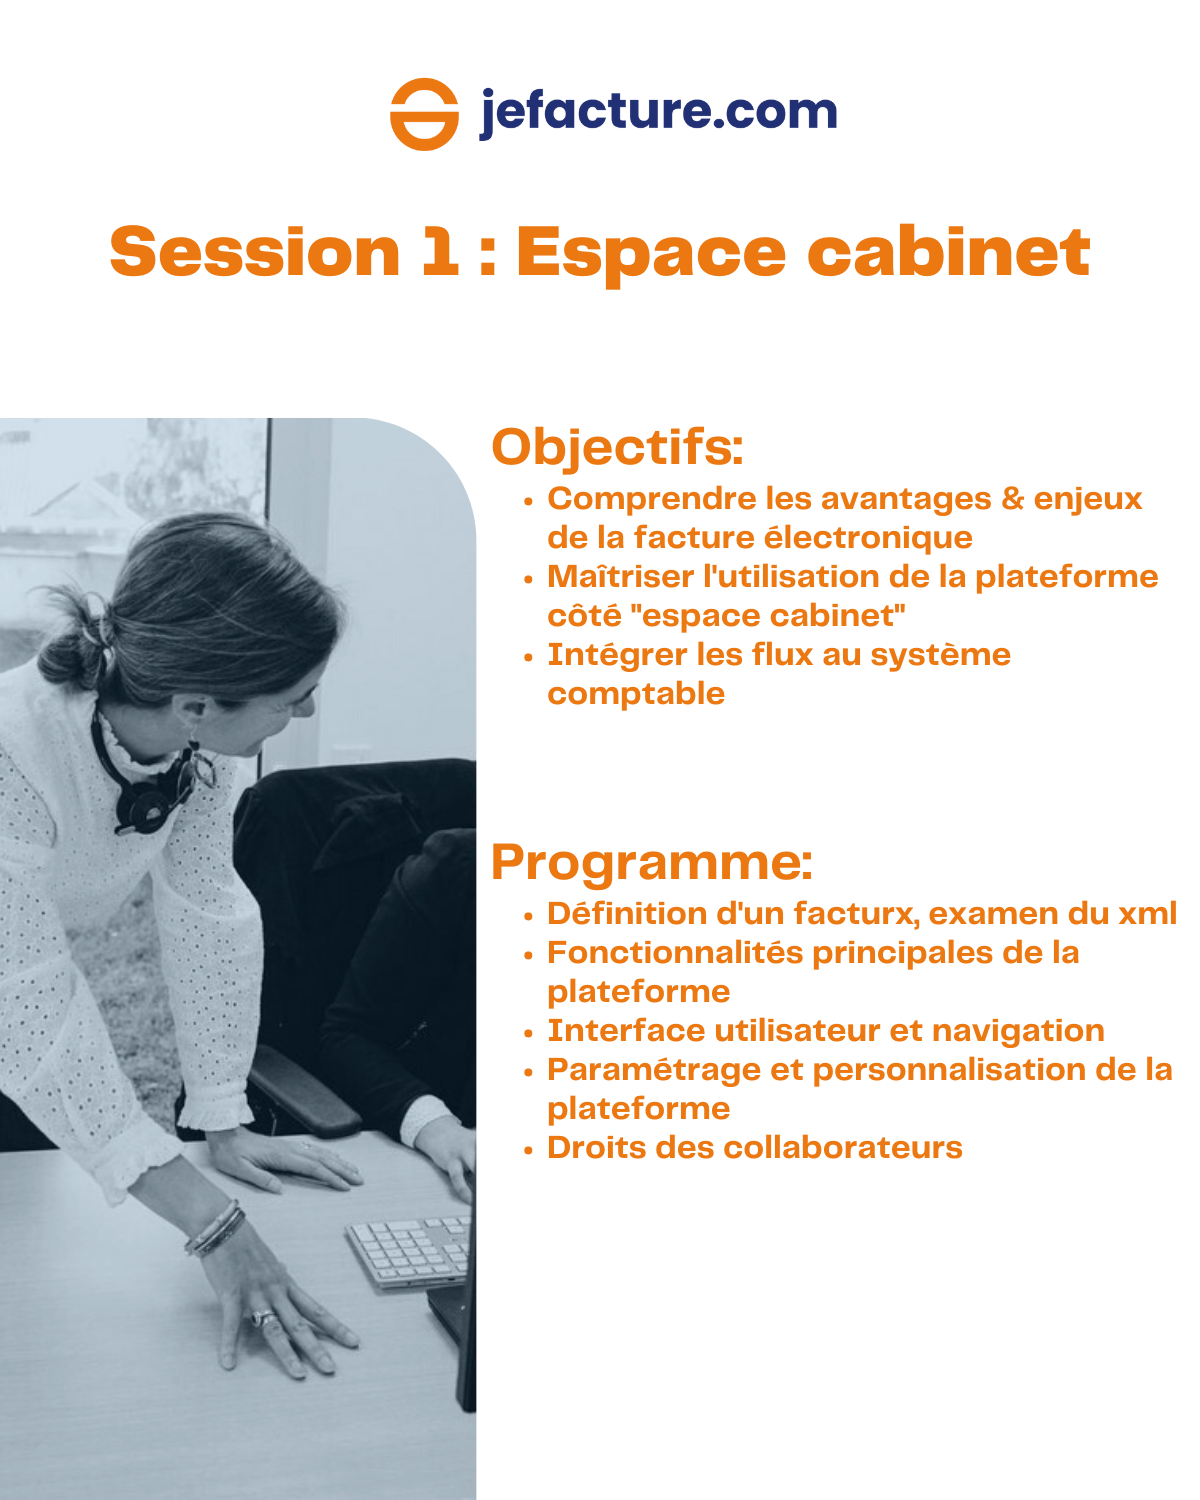 Session 1 : Espace cabinet